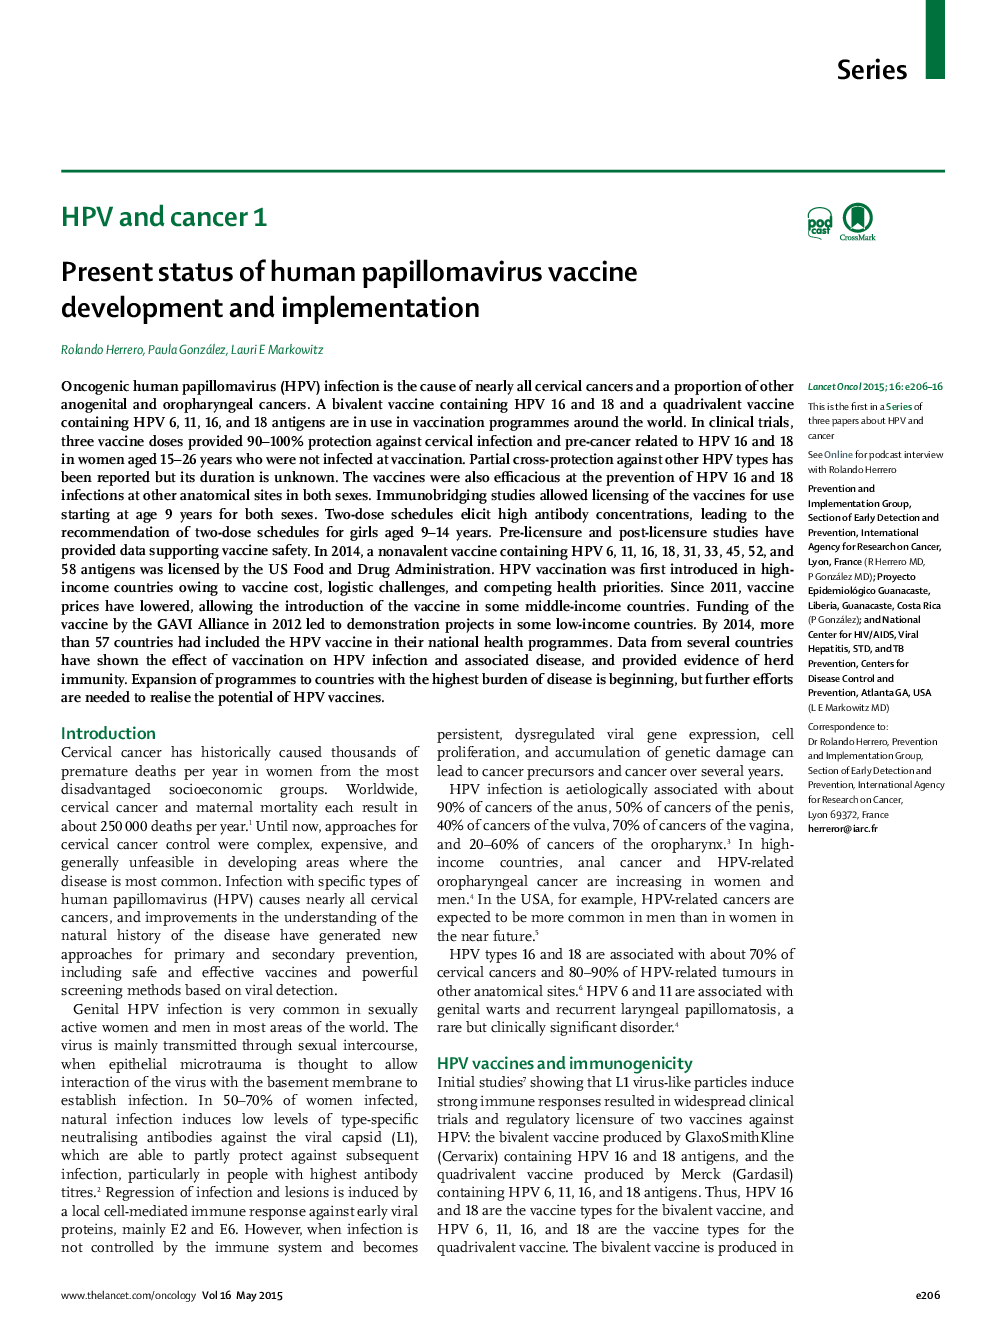 Present status of human papillomavirus vaccine development and implementation